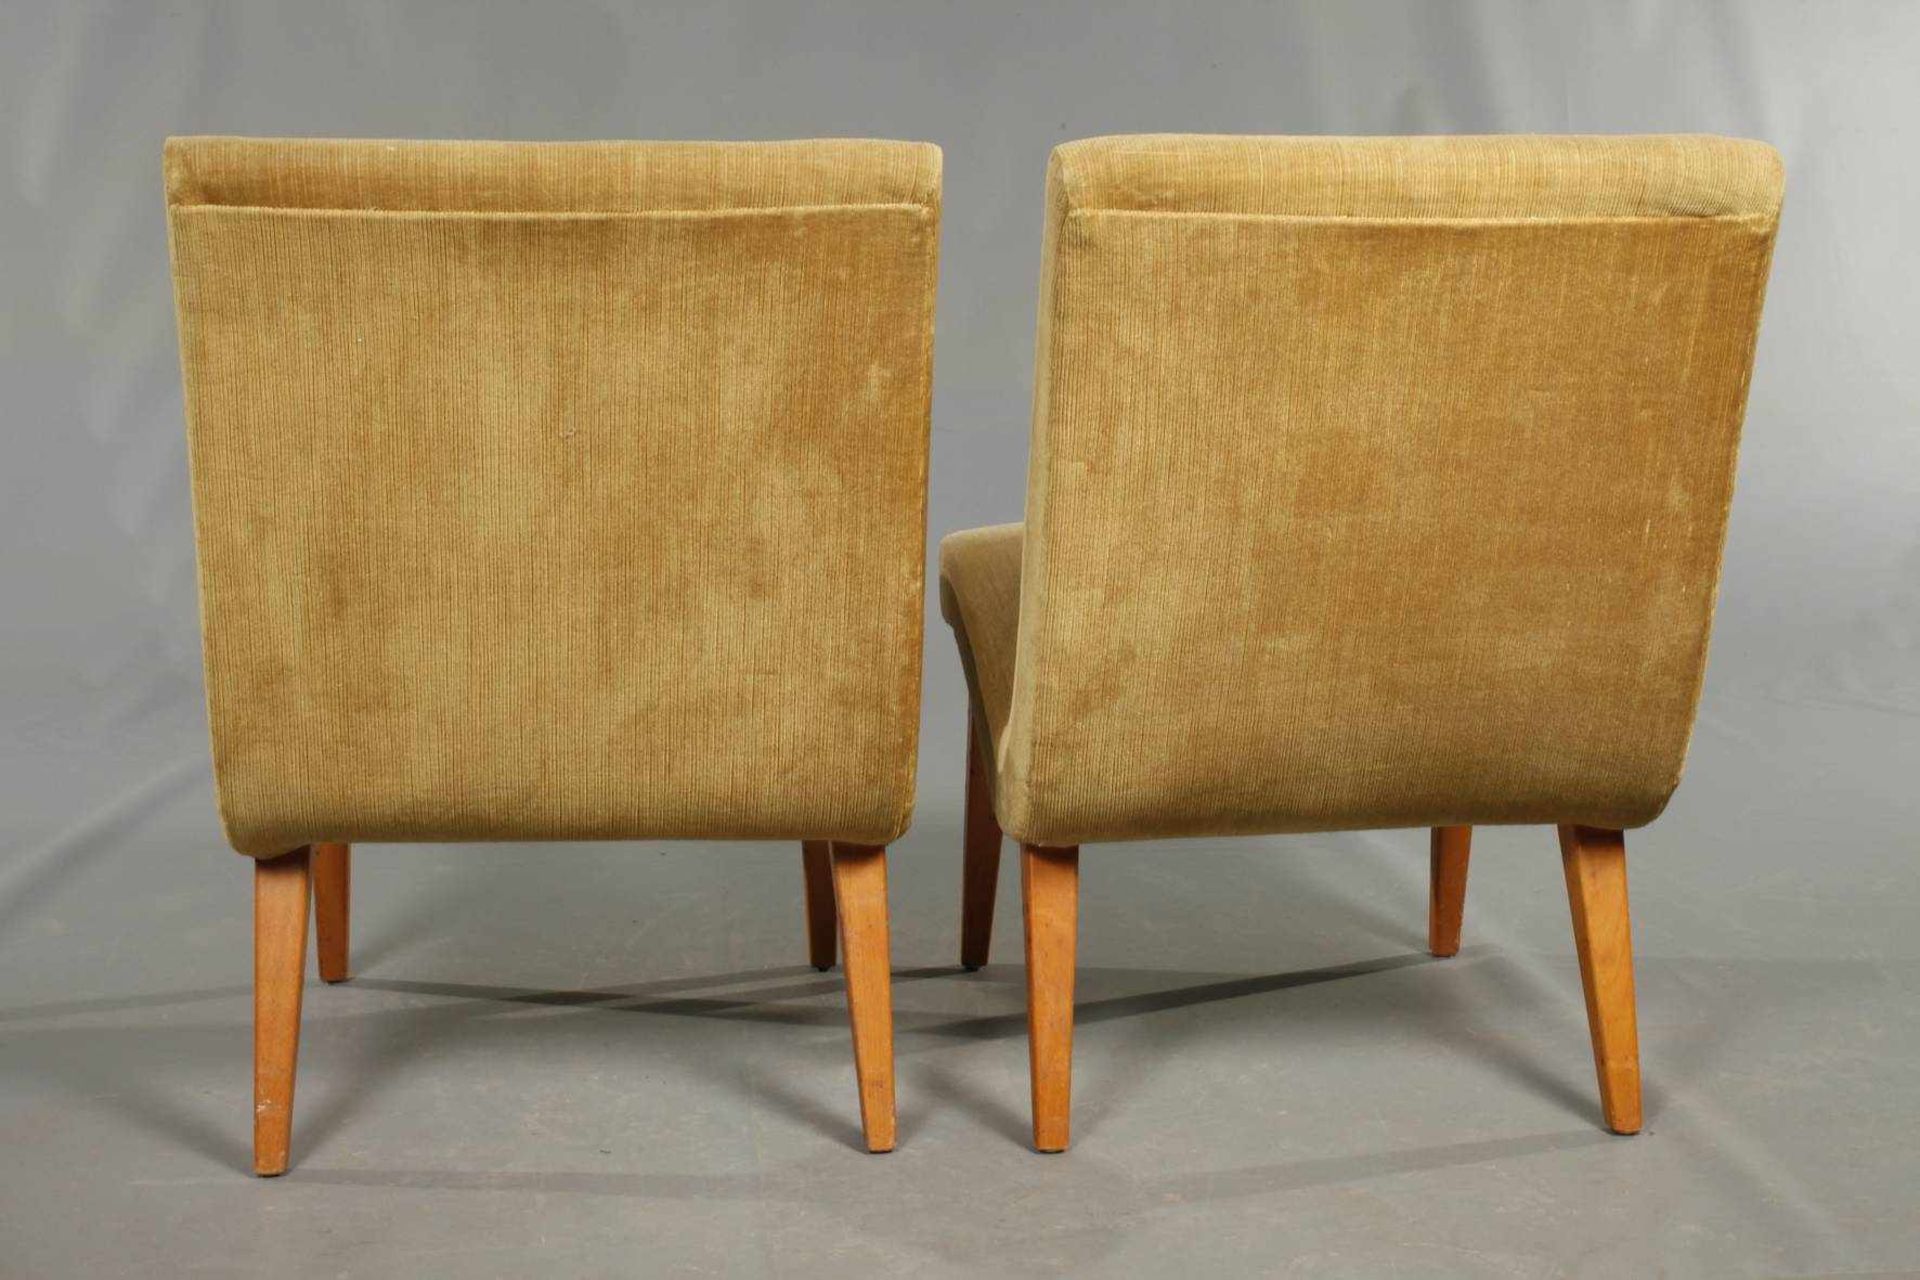 Zwei Sessel Modell "Vostra"Entwurf Jens Risom, Hersteller: Knoll, ca. 1949, Gestell aus Buche - Bild 3 aus 3